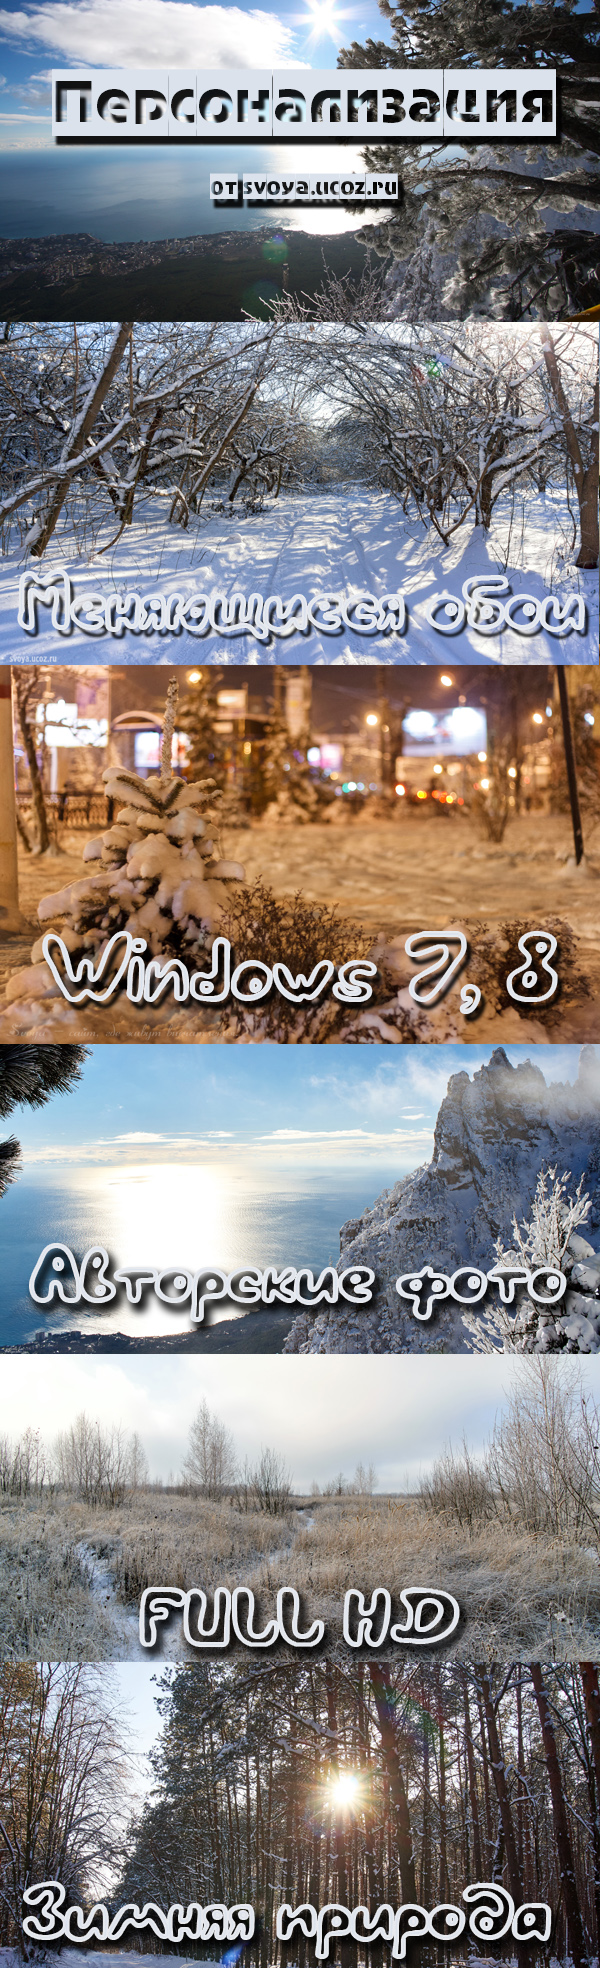 Меняющиеся обои Windows 7, 8 Зимняя природа - Svoya Winter Theme